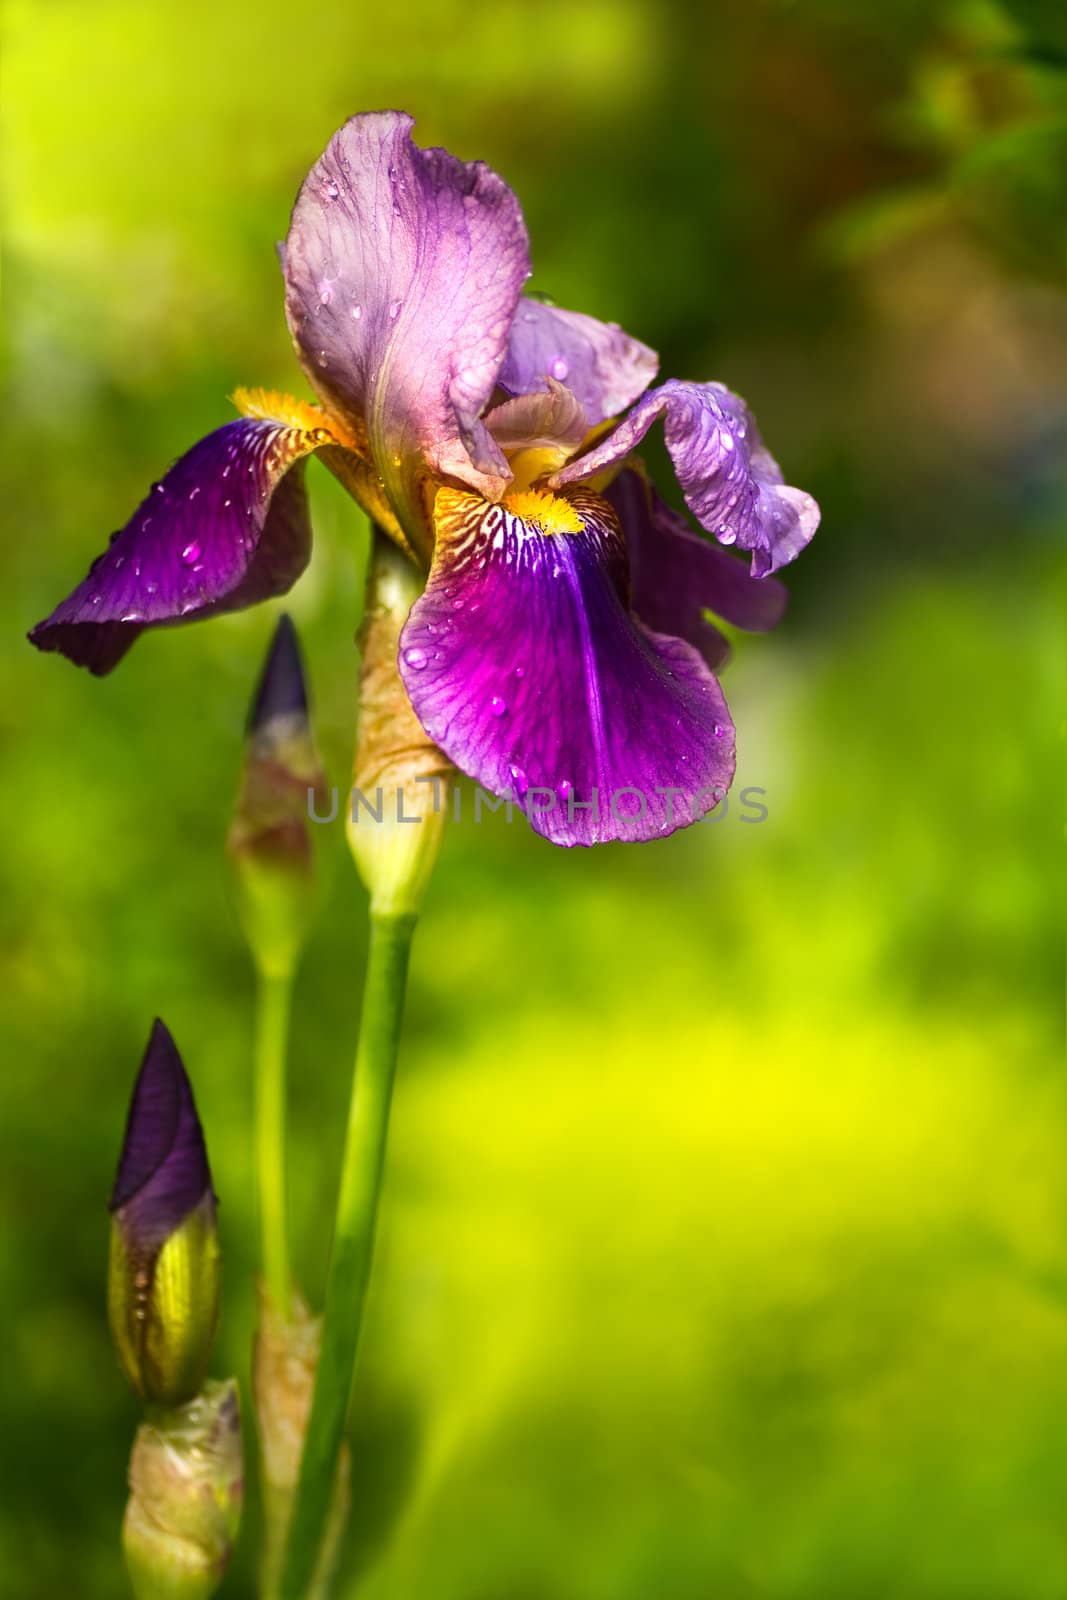 Purple German Iris or Iris germanica in garden in spring after rain